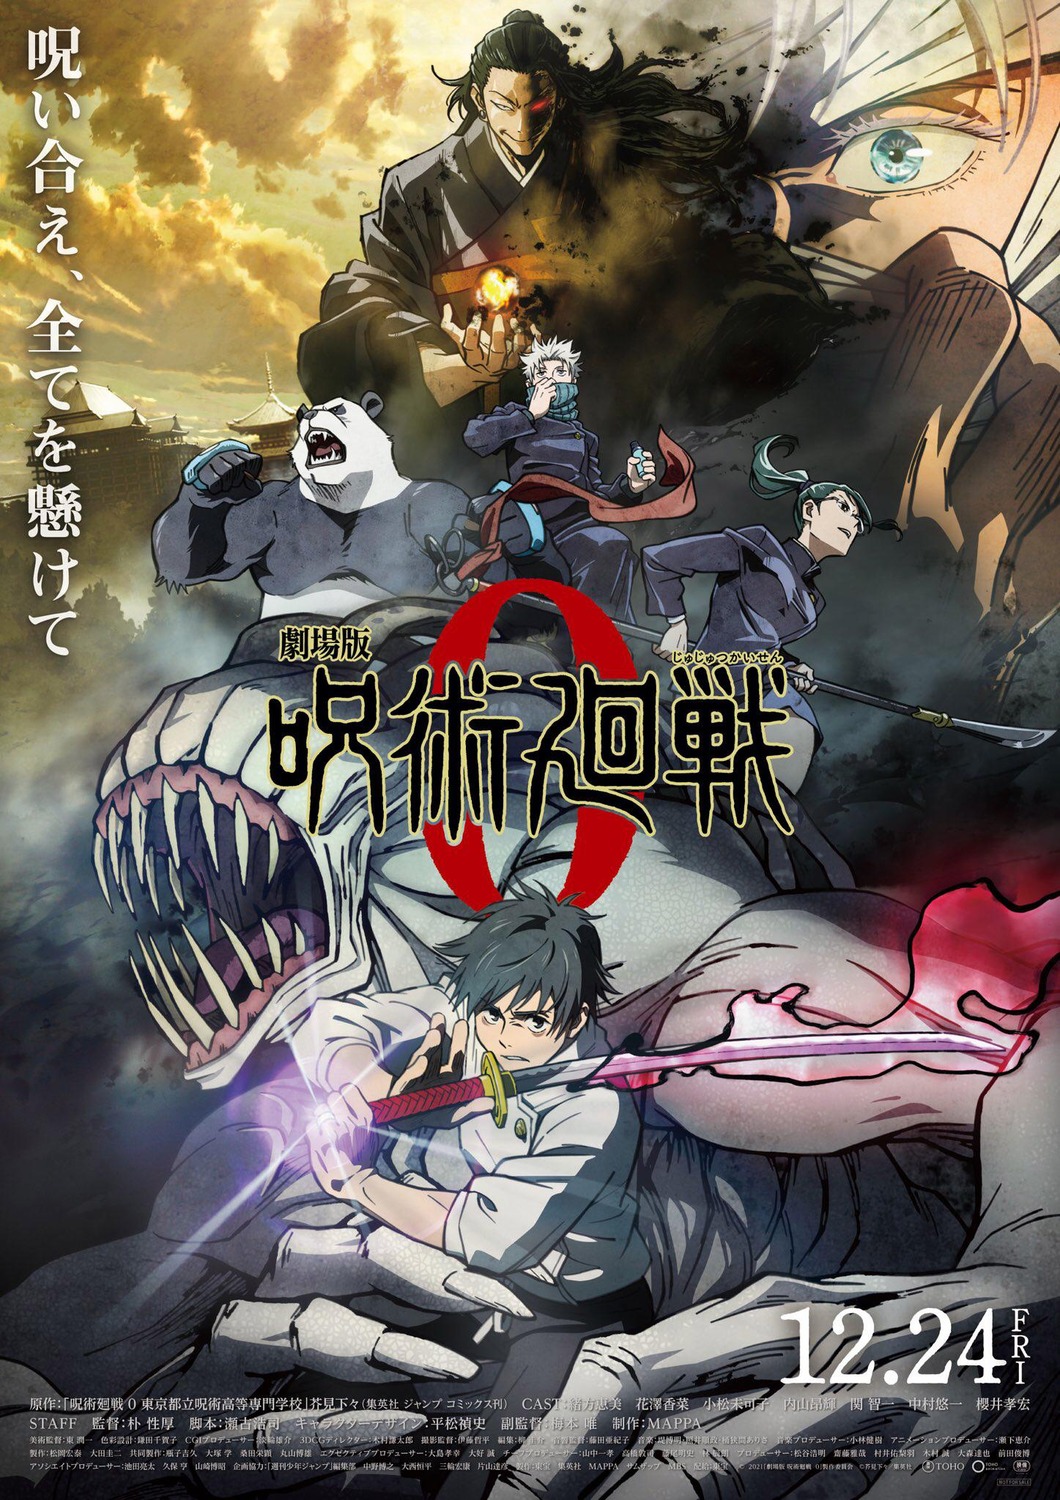 Extra Large Movie Poster Image for Gekijouban Jujutsu Kaisen 0 